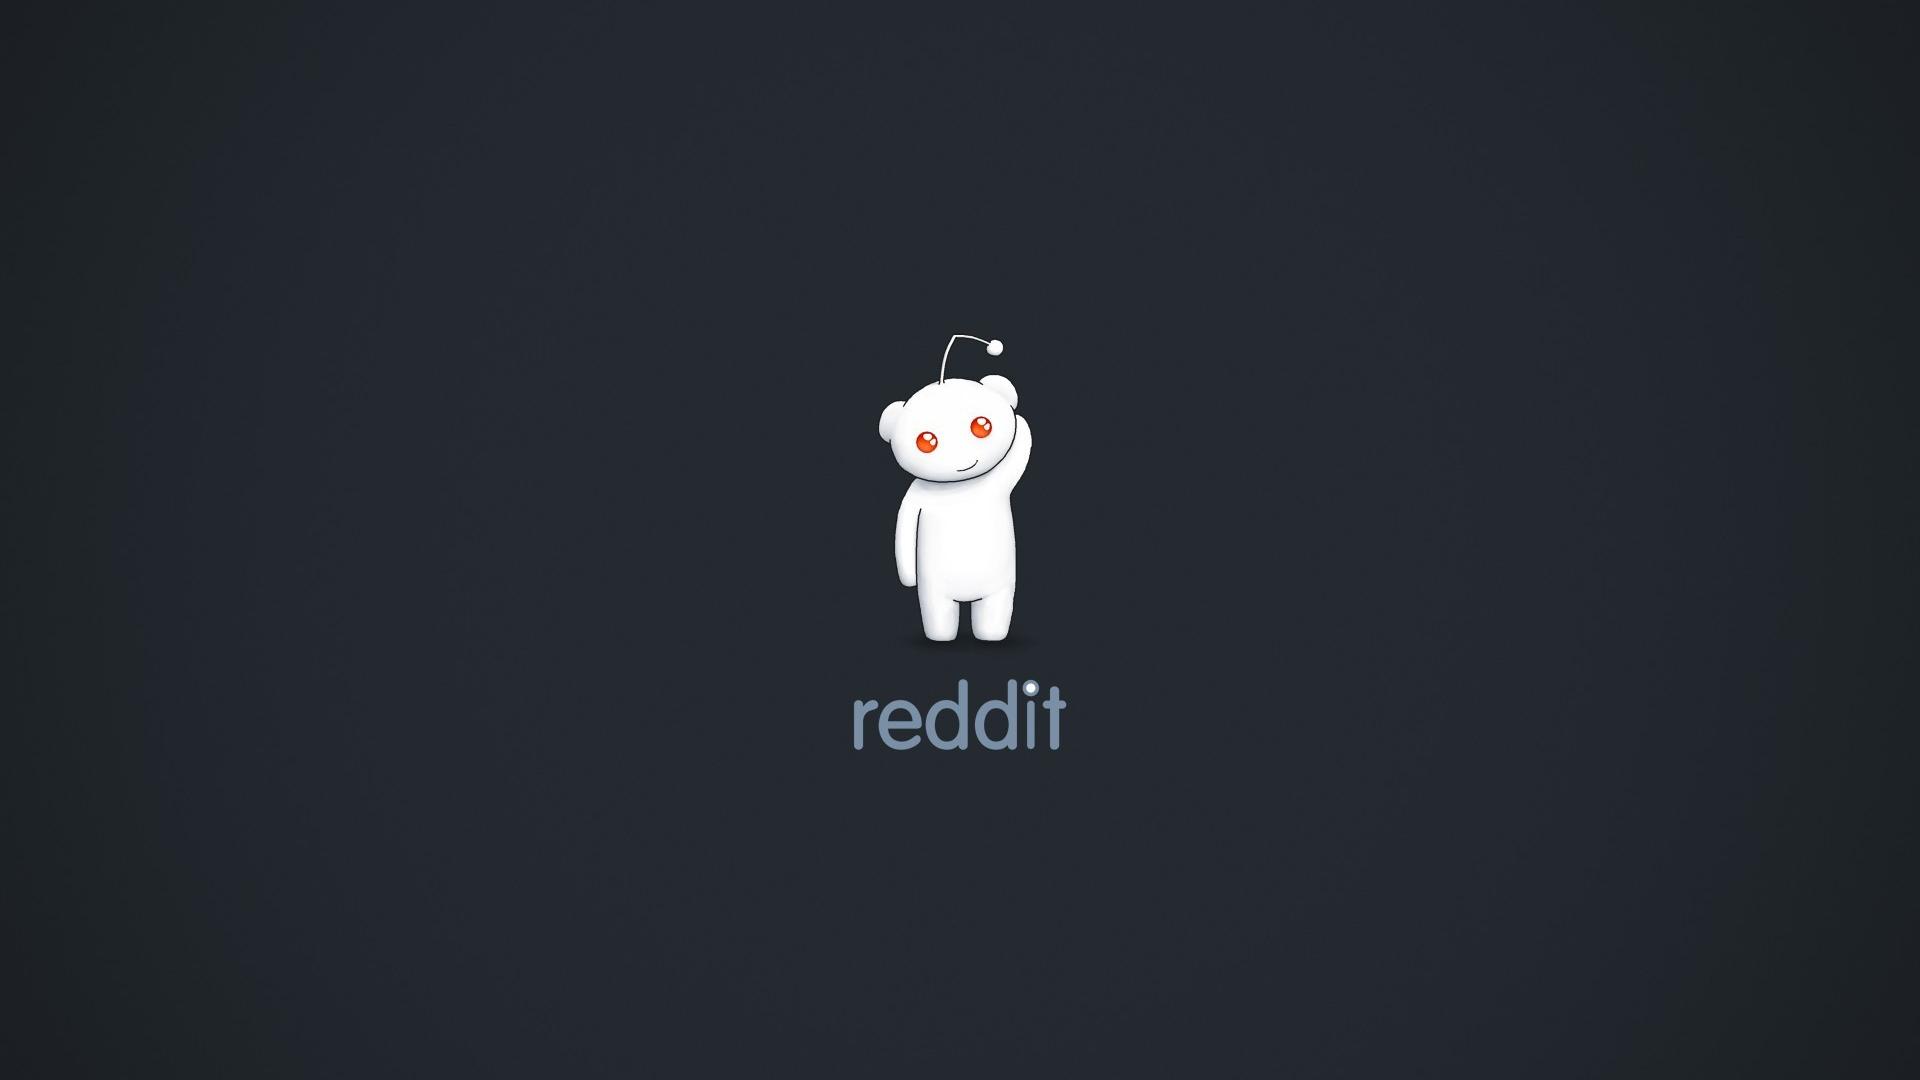 Free download Reddit wallpaper 32489 [1920x1080] for your Desktop